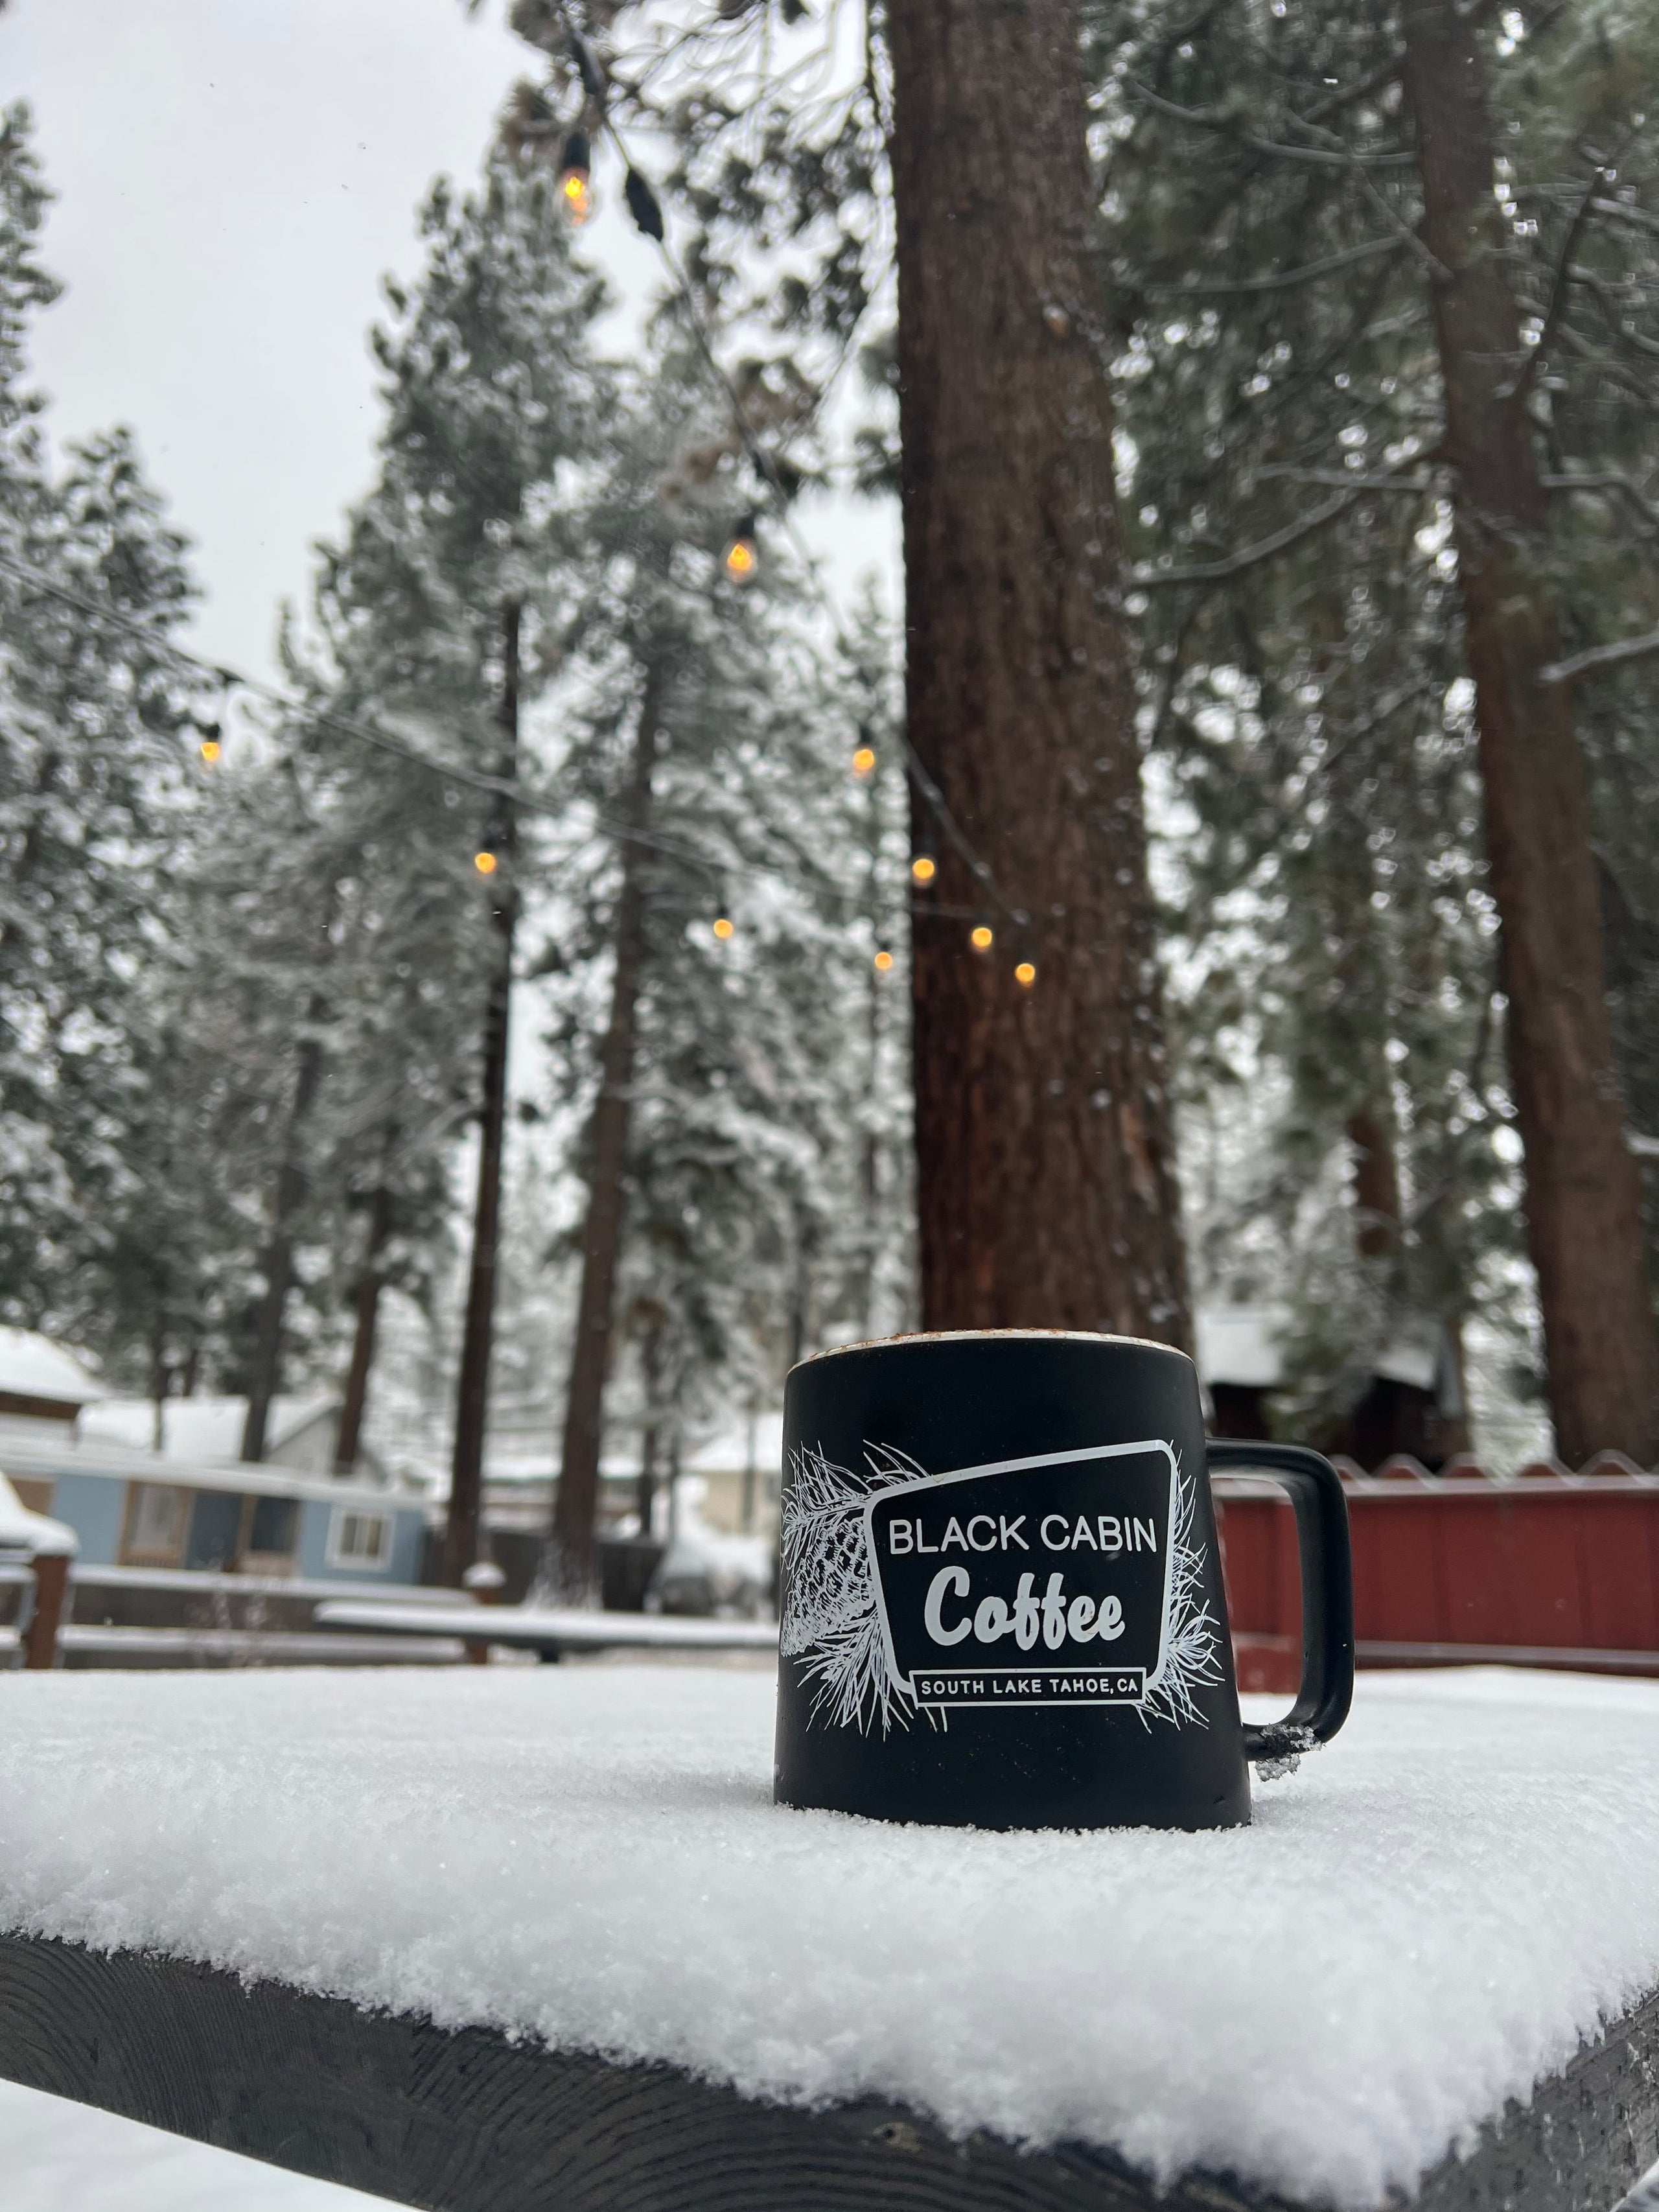 DRINK COFFEE DO STUFF - Coffee Roastery in South Lake Tahoe